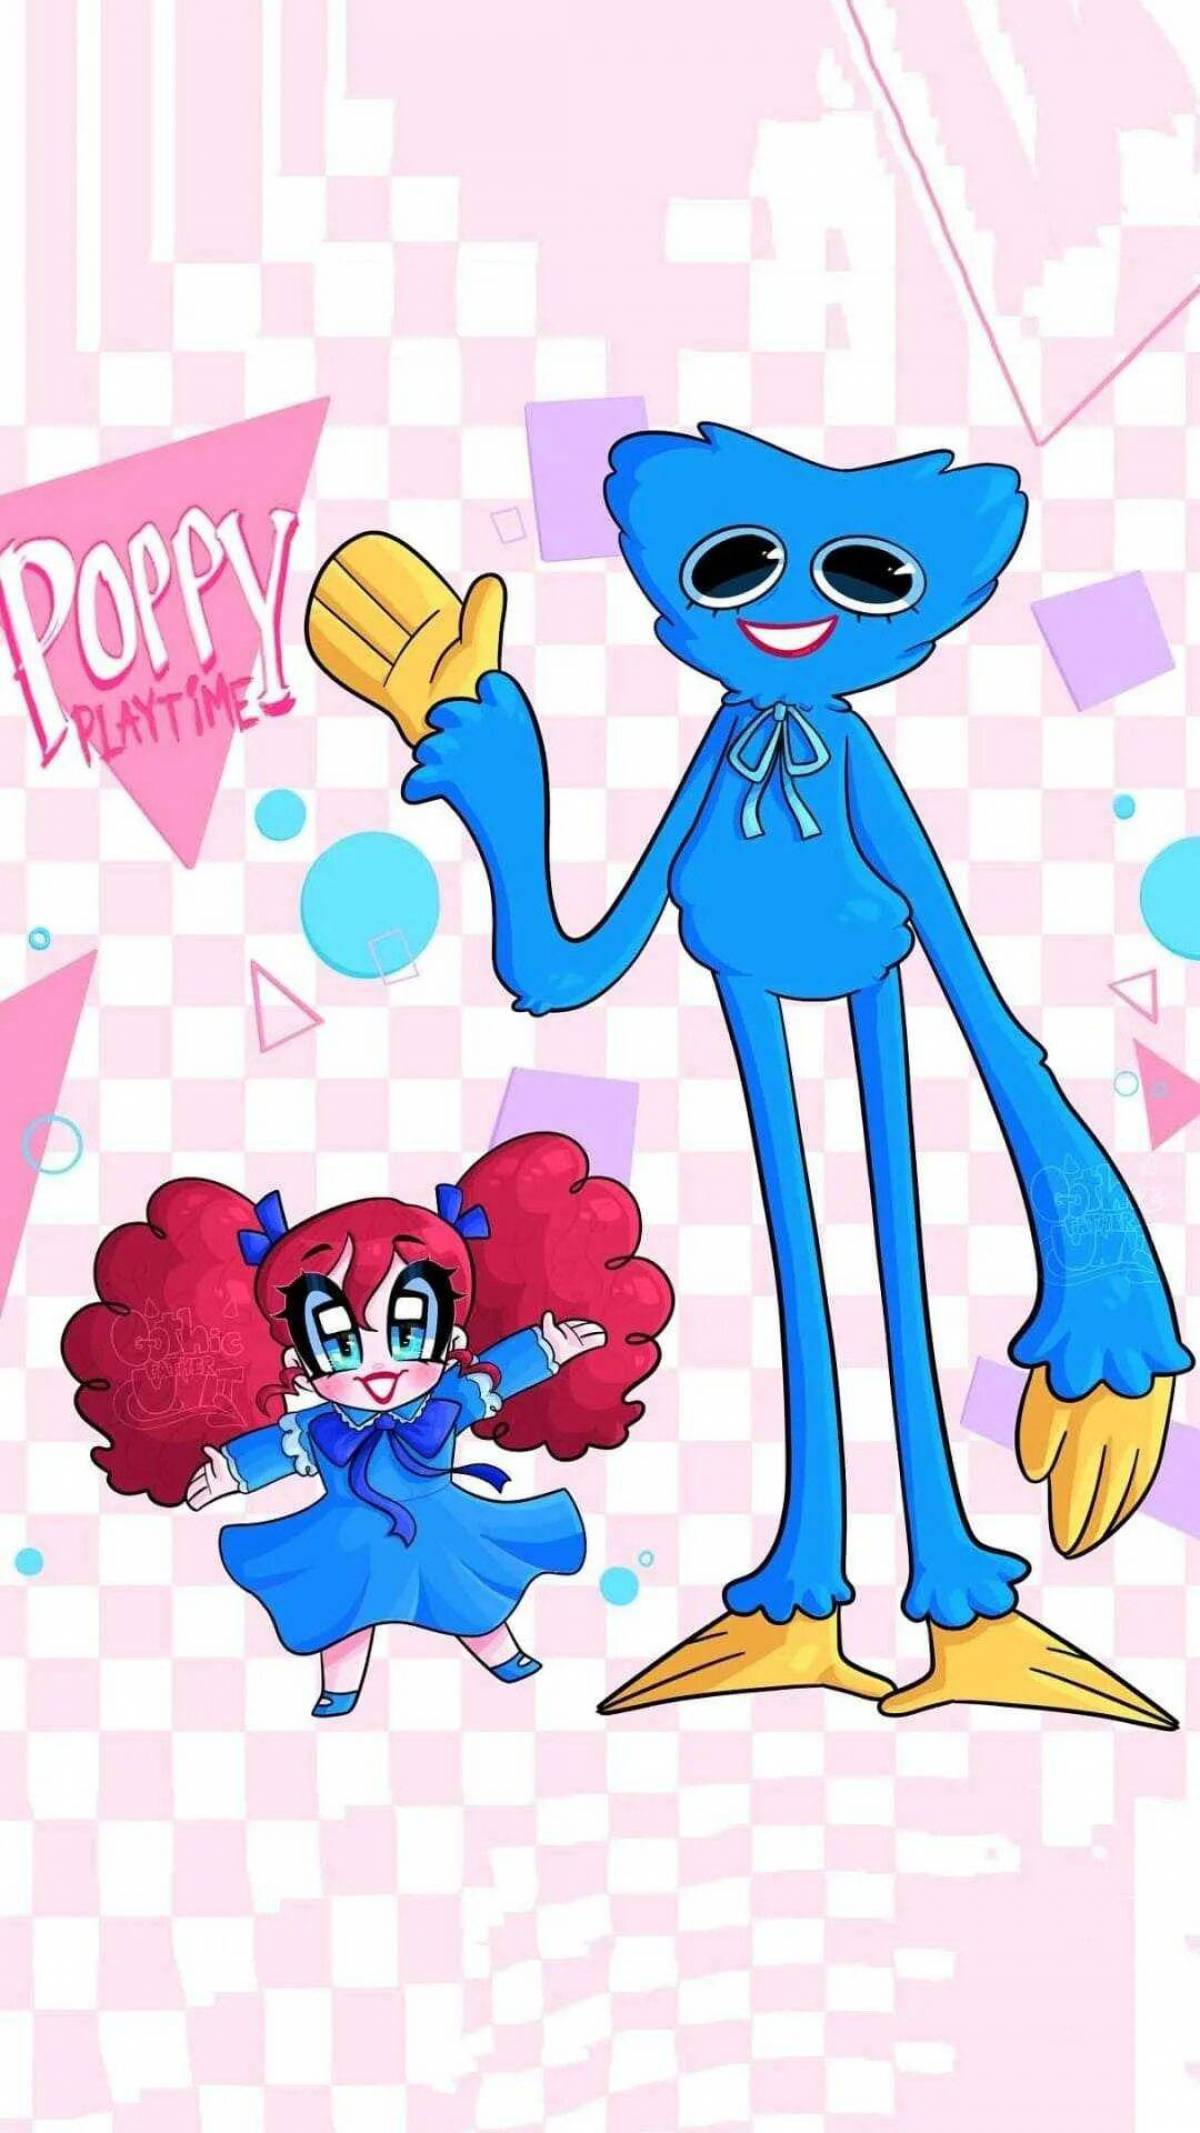 Включи как сделать poppy playtime. Поппи Плэйтайм. Poppy Playtime Поппи. Кукла Поппи из игры Poppy Playtime. Игрок из Поппи плей тайм.